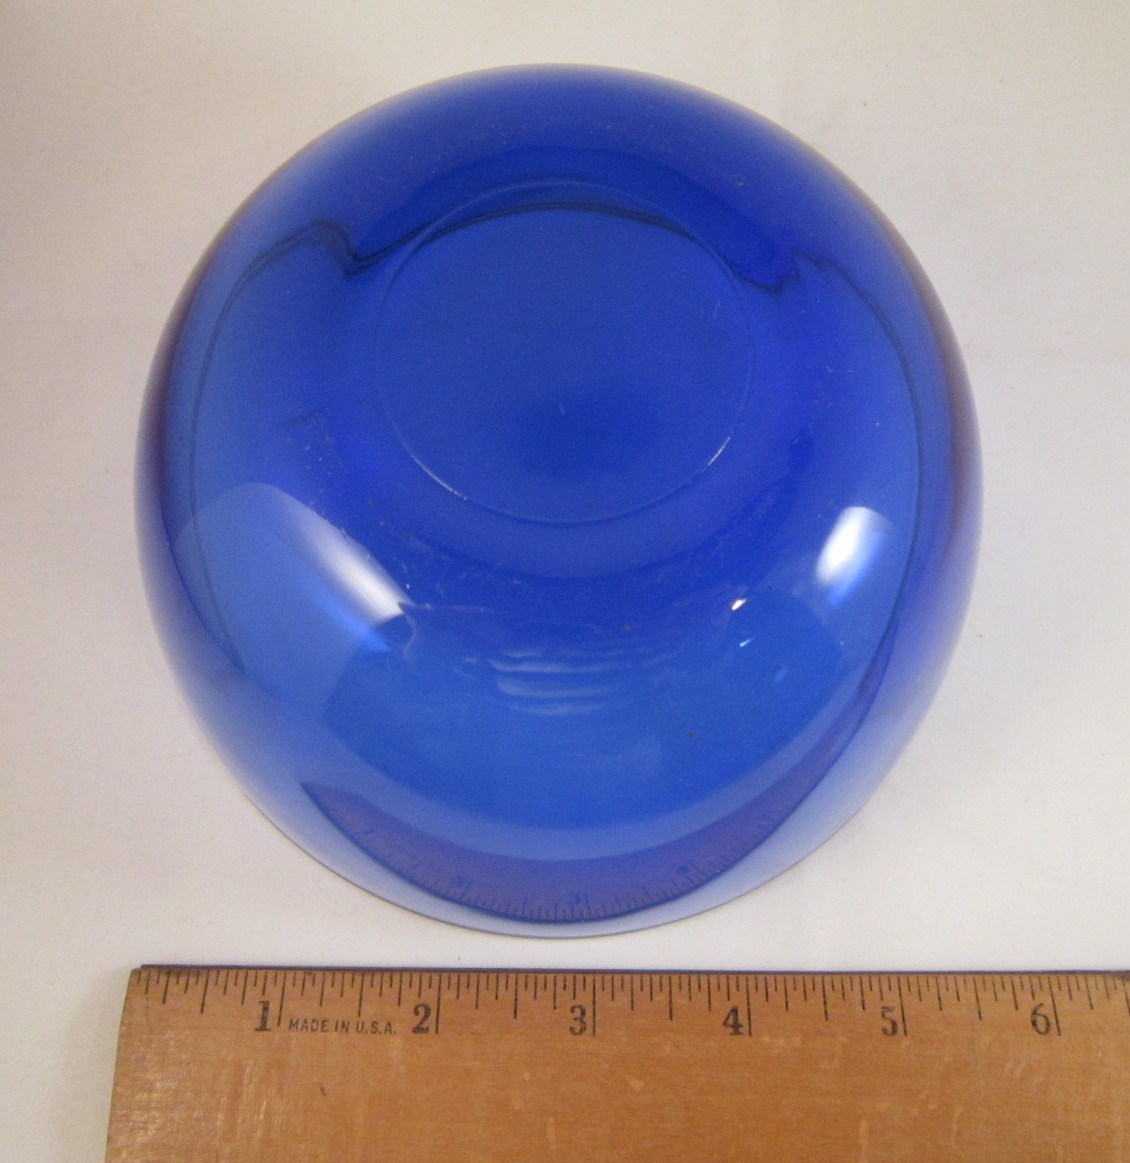 Cobalt Blue Glass Bowl Serving Dish Vase For Red White And Blue Decor Bowls